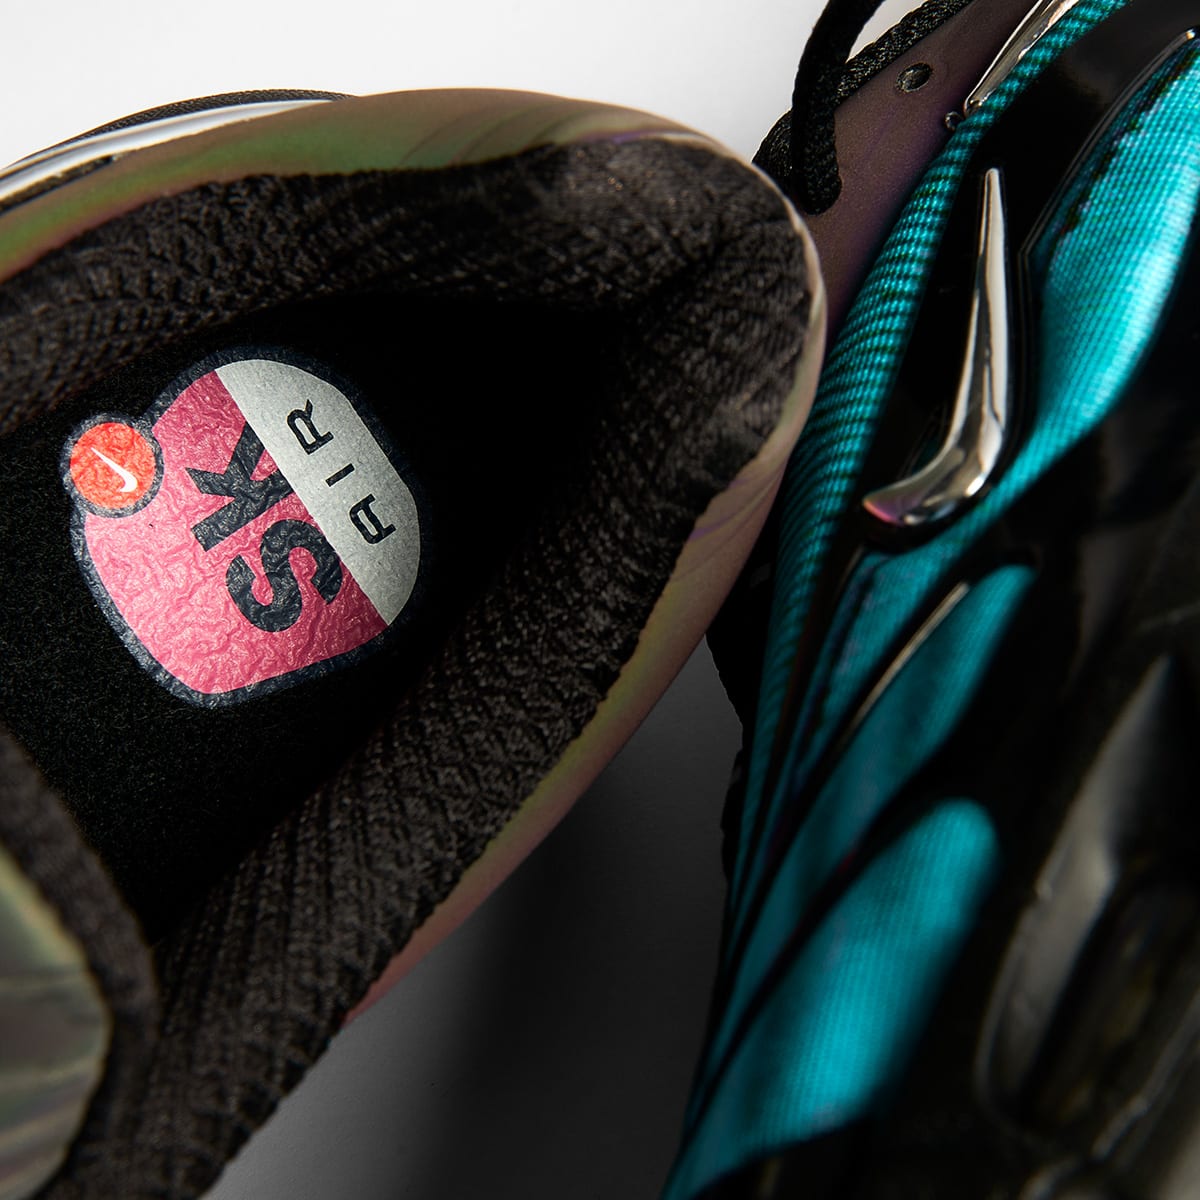 Nike x Skepta Air Max Tailwind 5 (Black & Chrome) | END. Launches